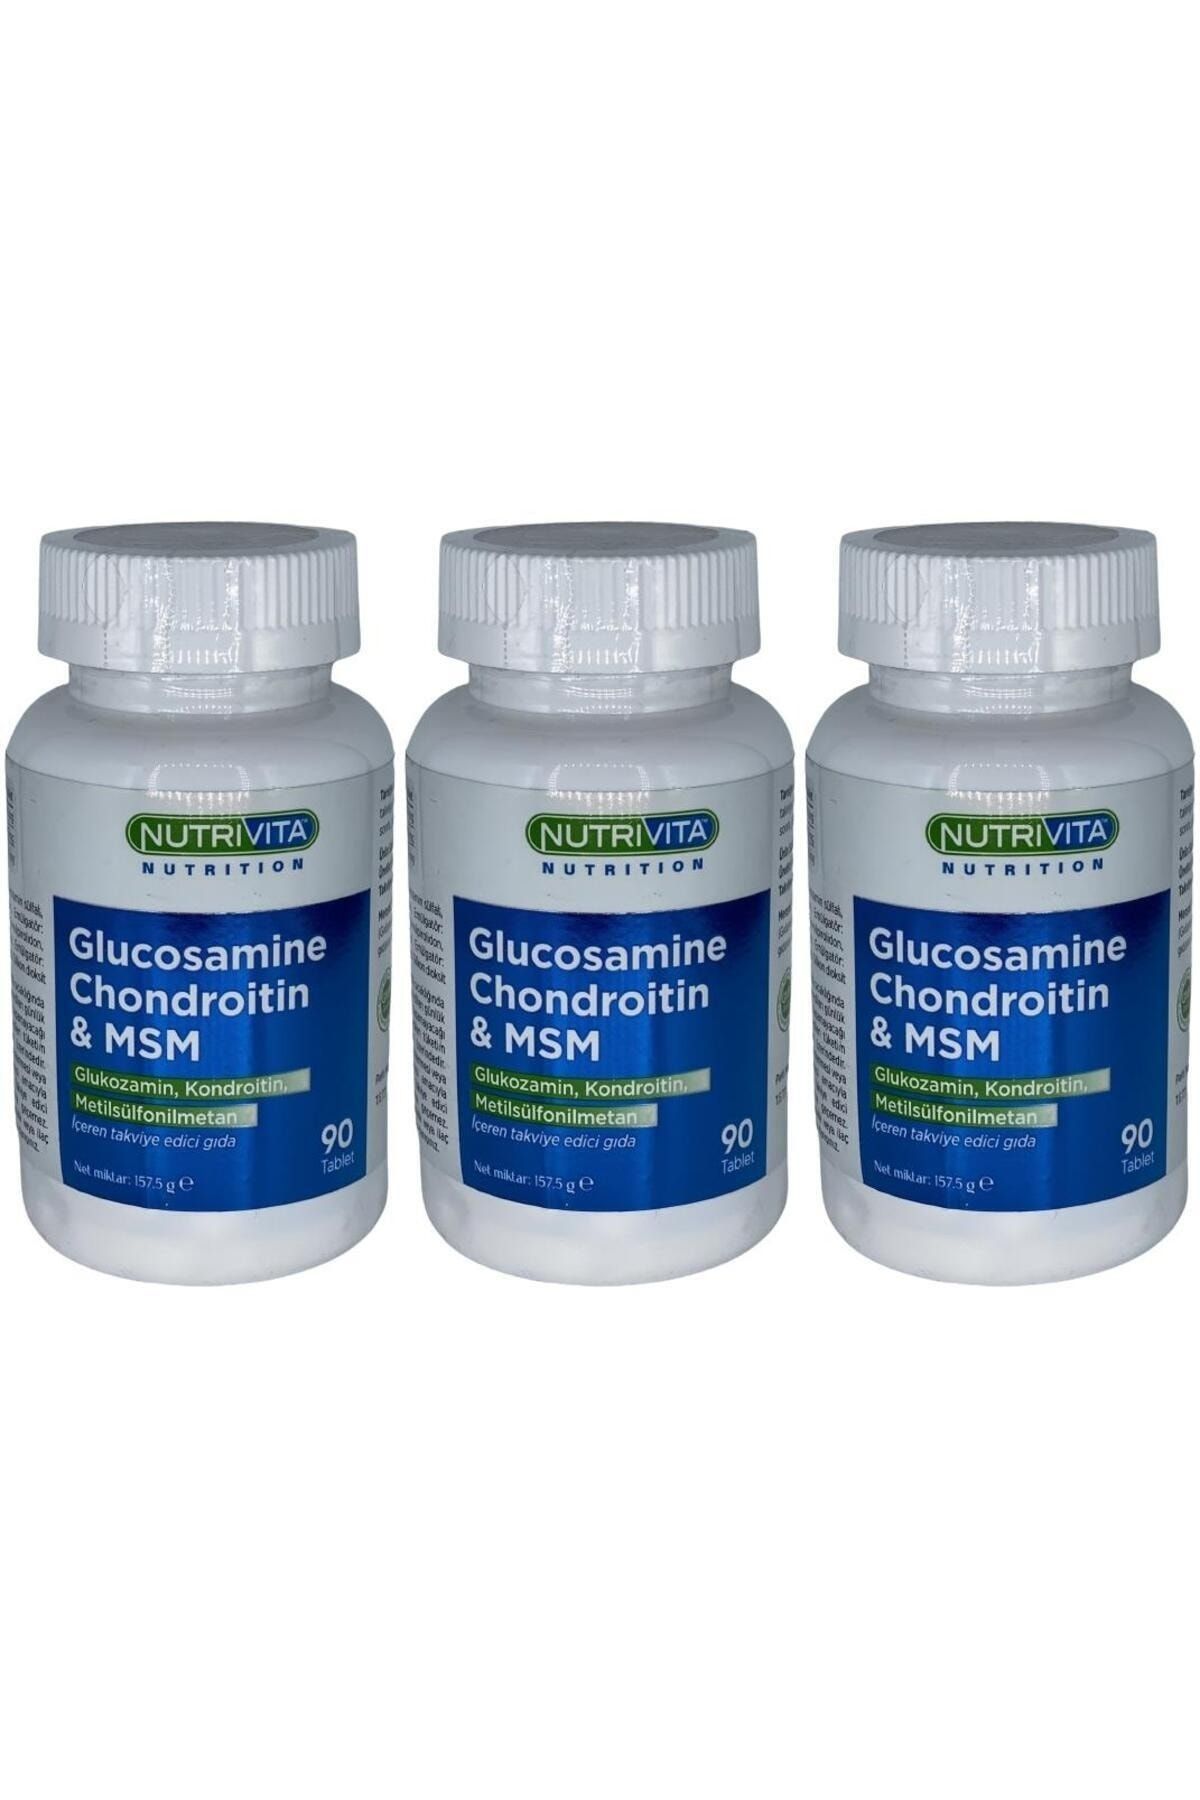 Nutrivita Nutrition Glucosamine Chondroitin Msm 3x90 Tablet Glukozamin Kondroitin